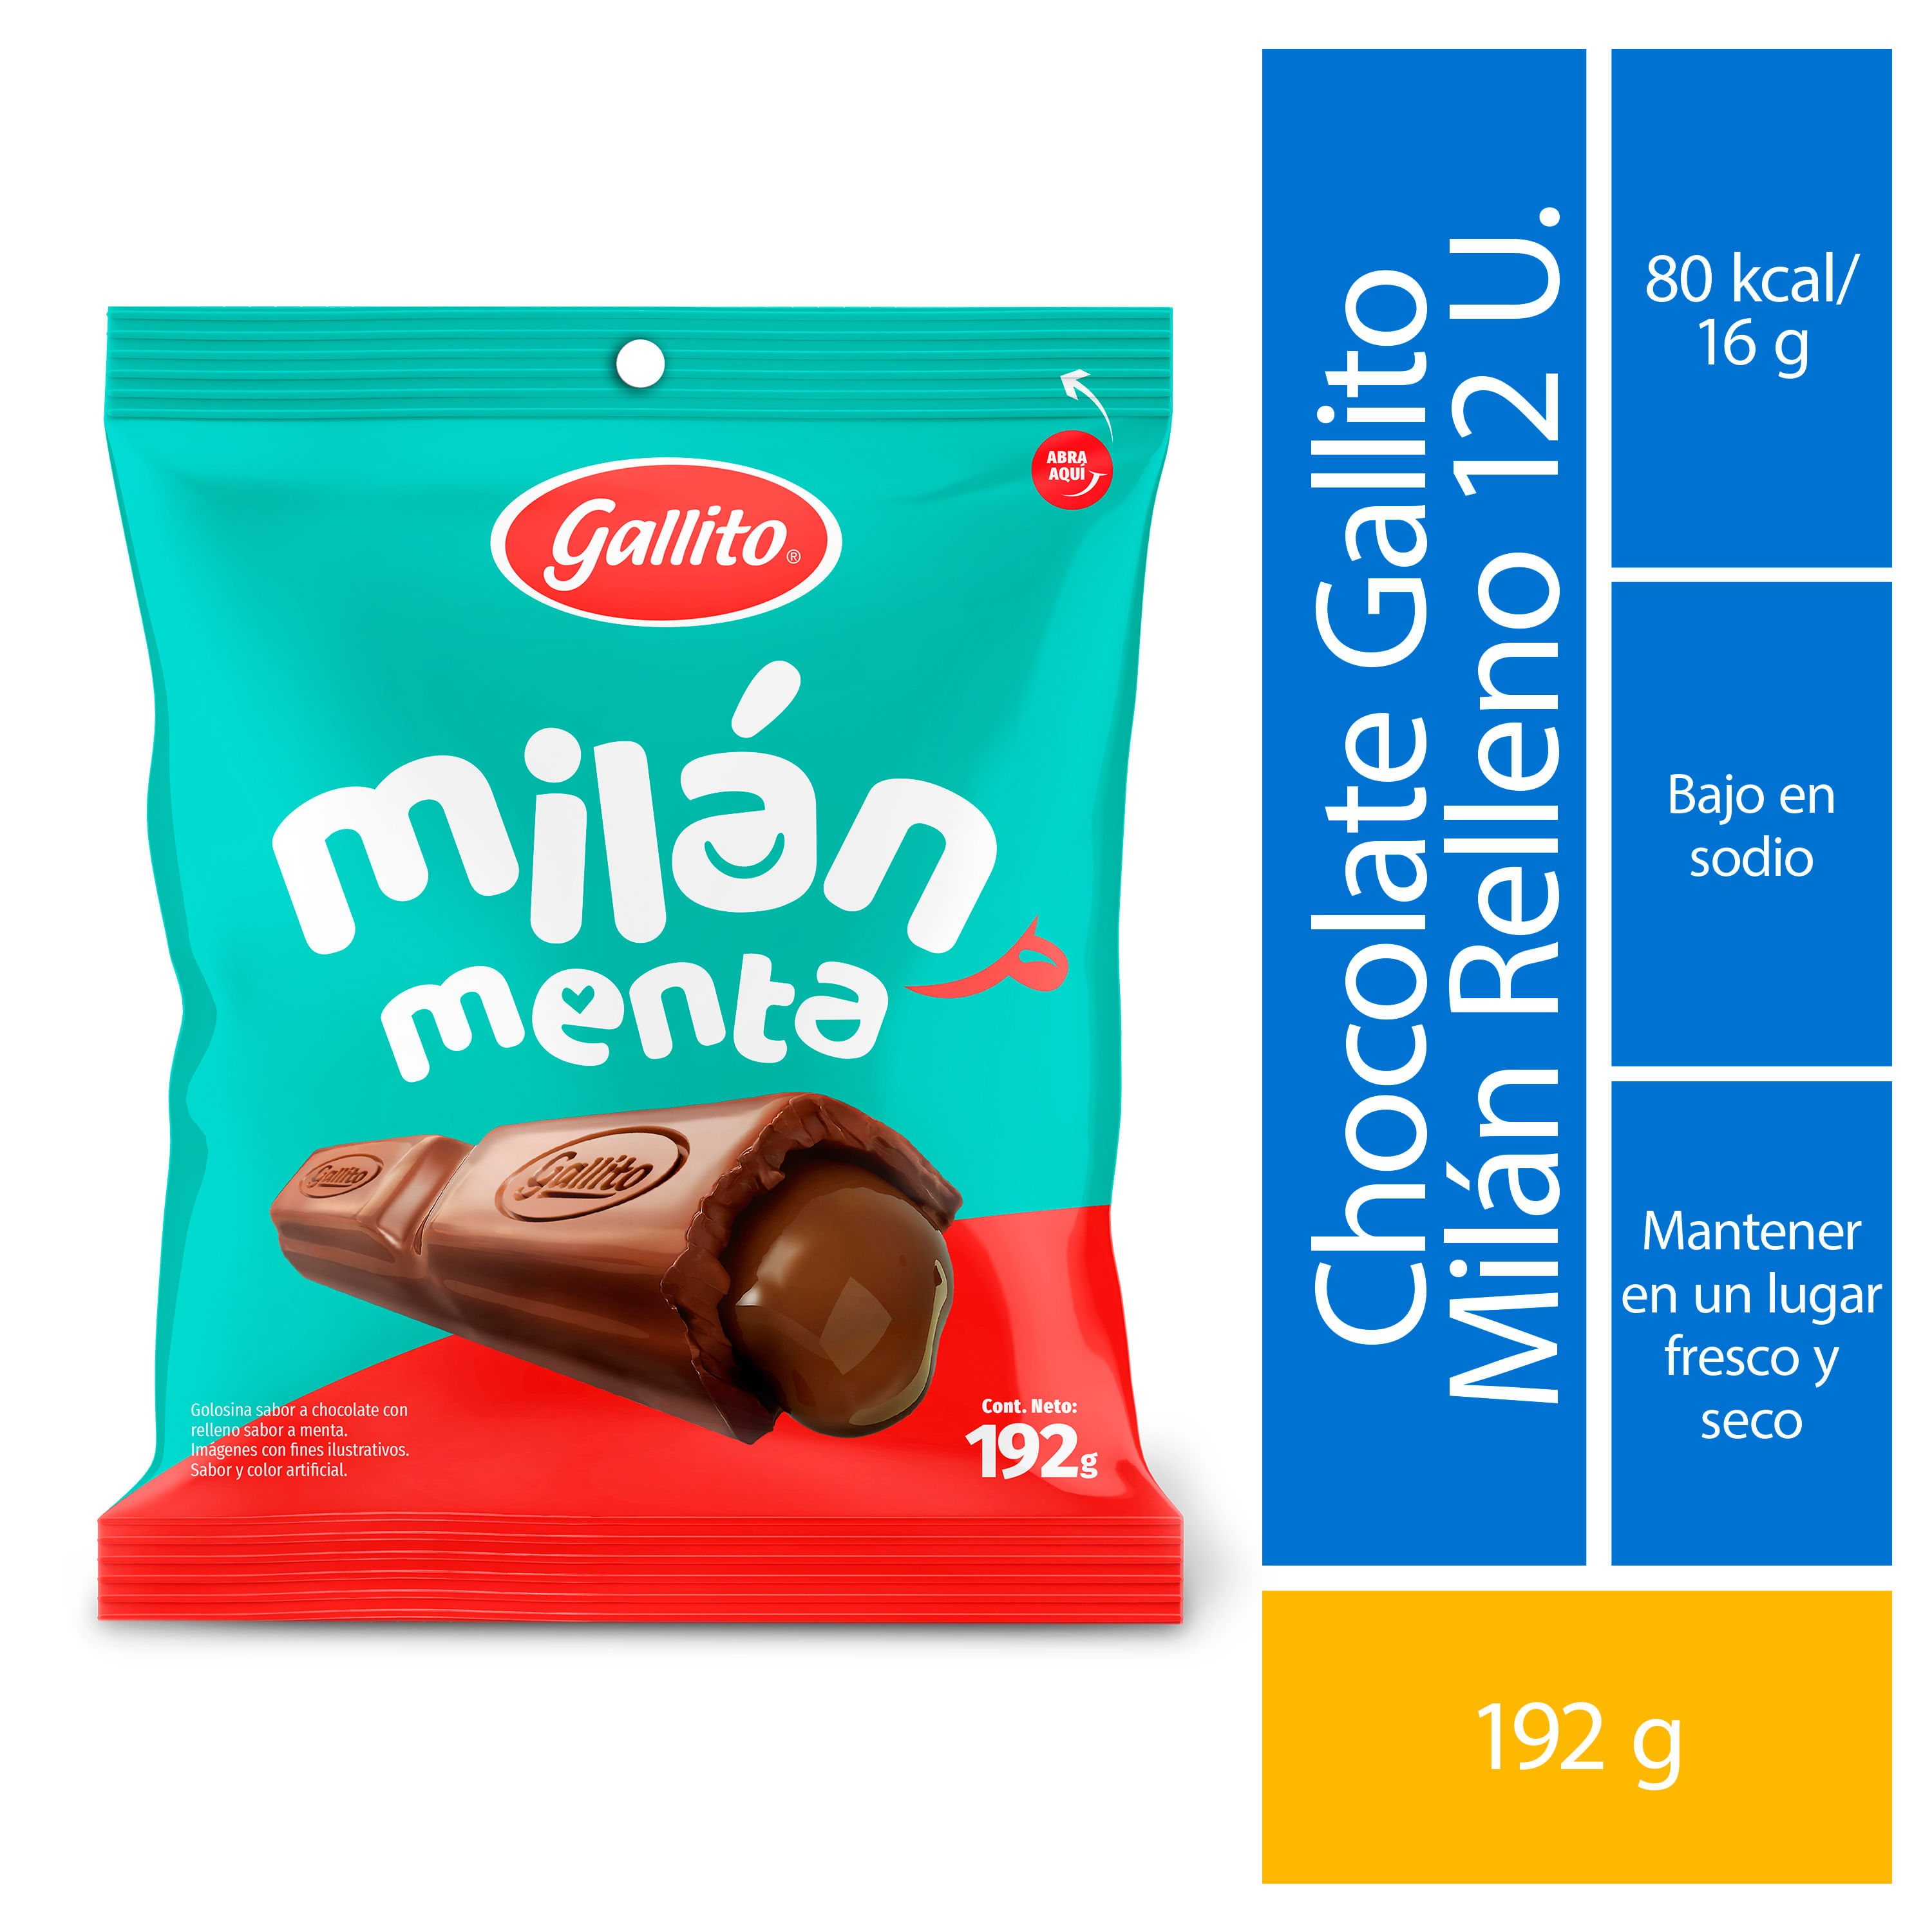 Comprar Chocolate Tutto, Blanco Cookies Cream -44 gr, Walmart Costa Rica -  Maxi Palí